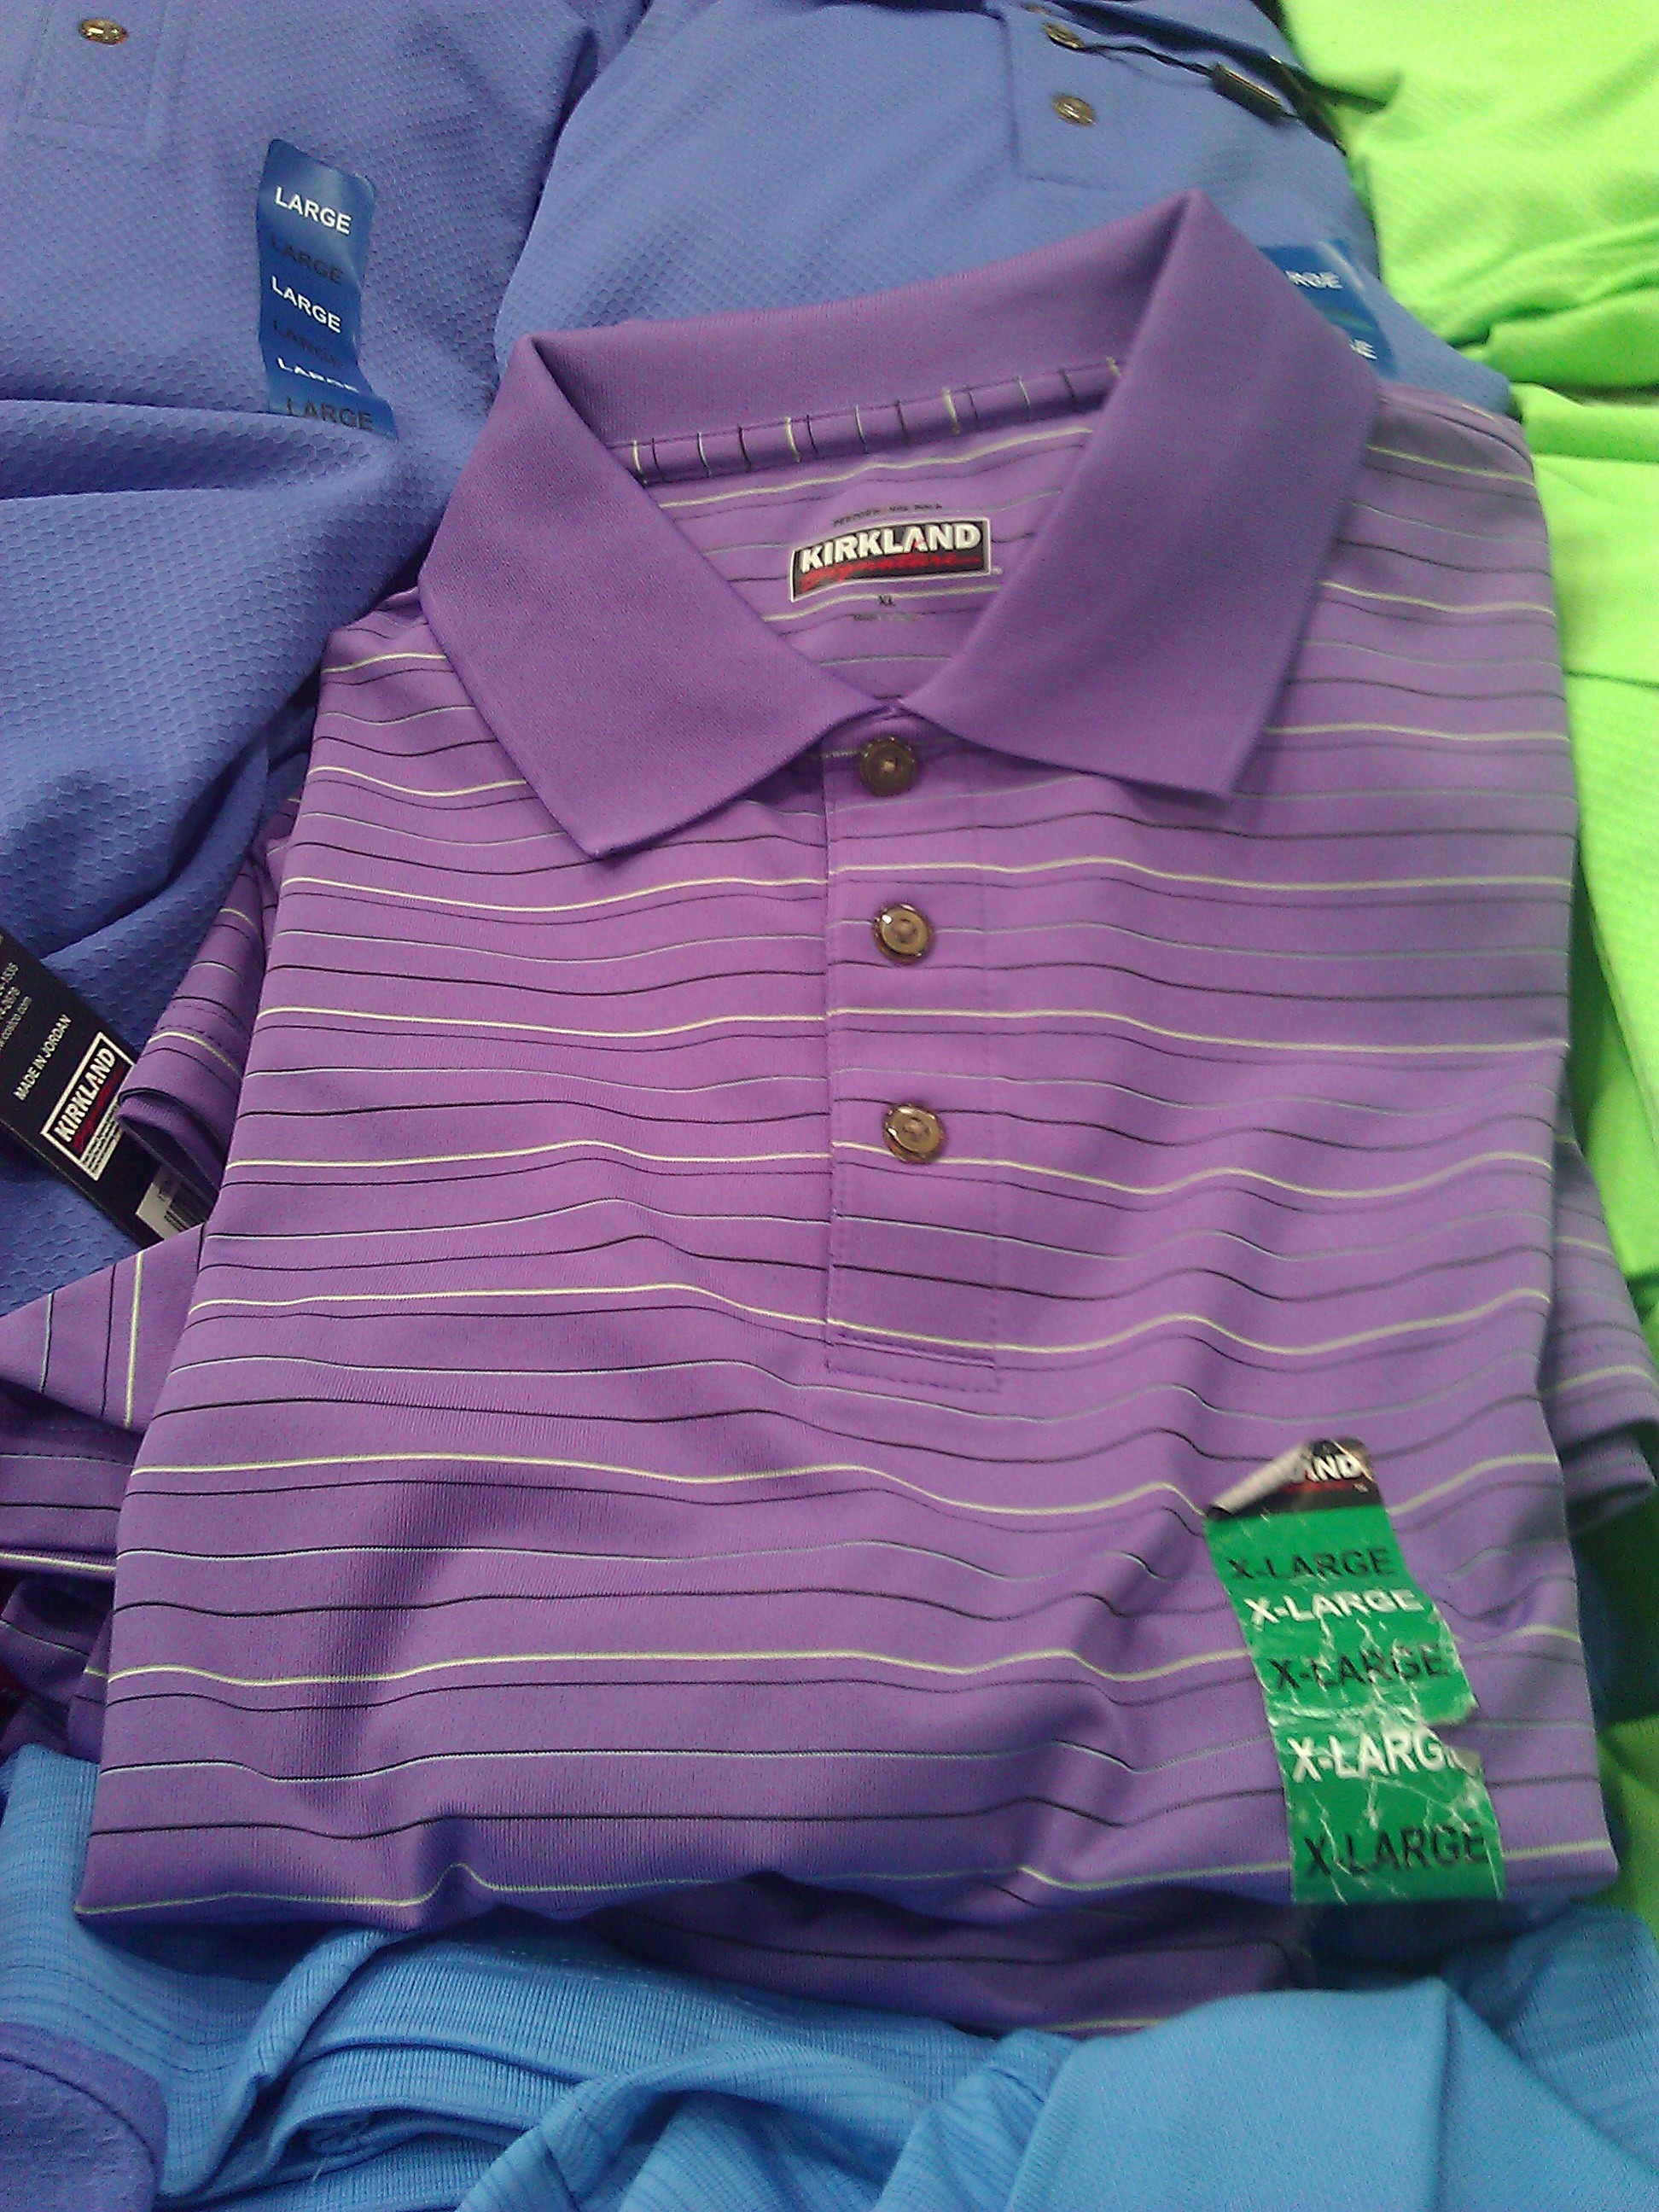 Kirkland Signature Golf Polo Shirts Costco